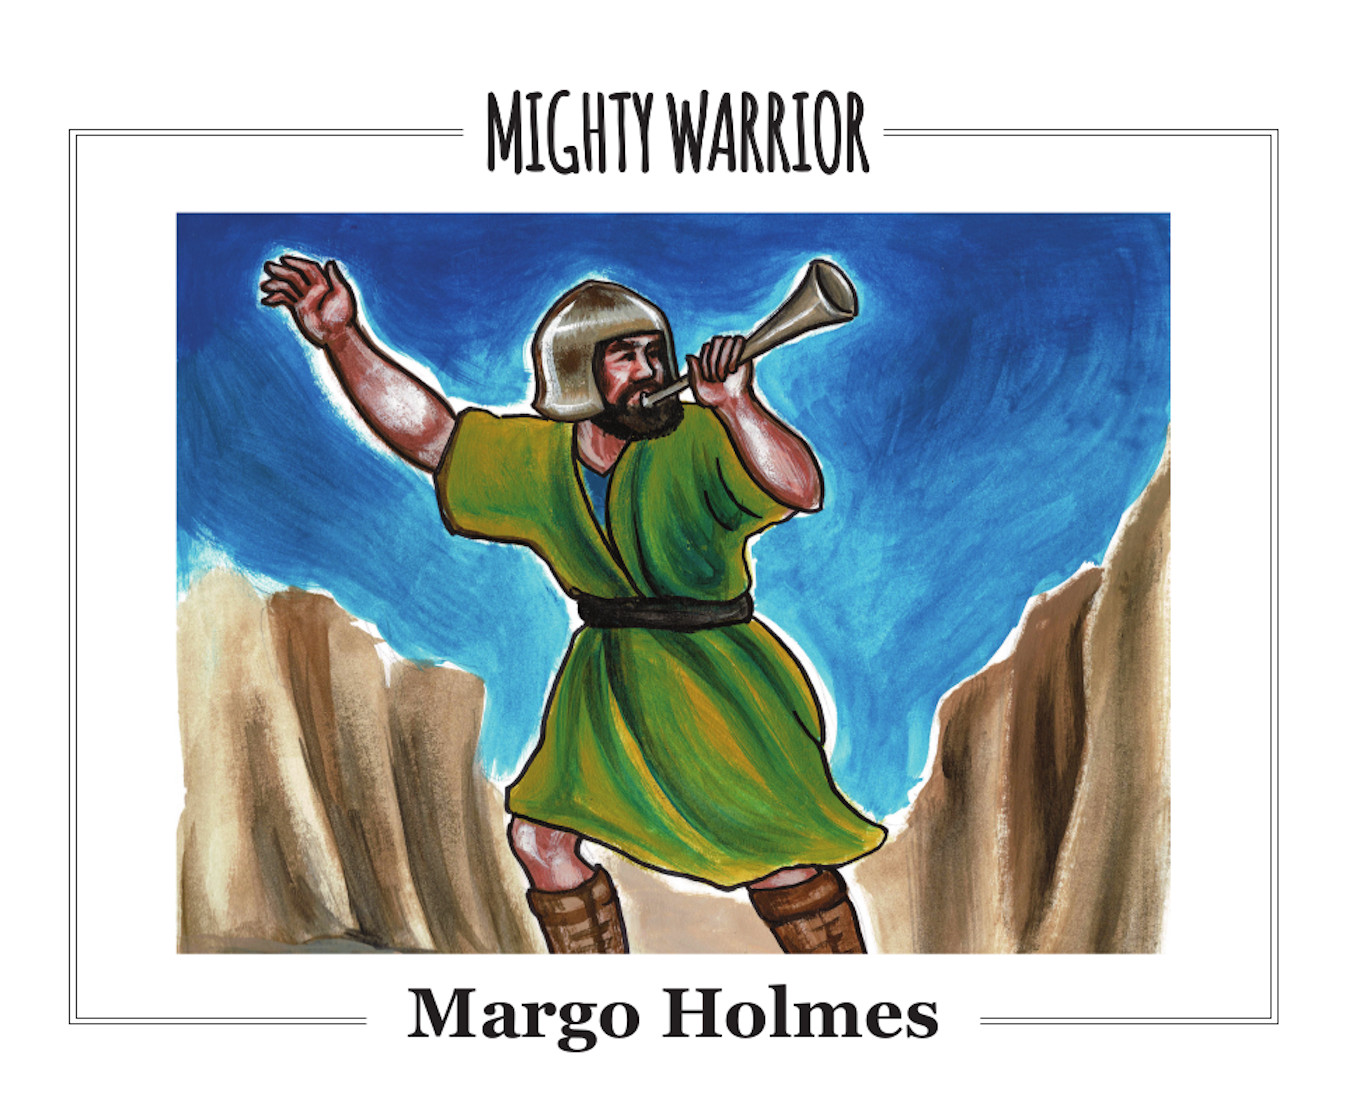 Mighty Warrior